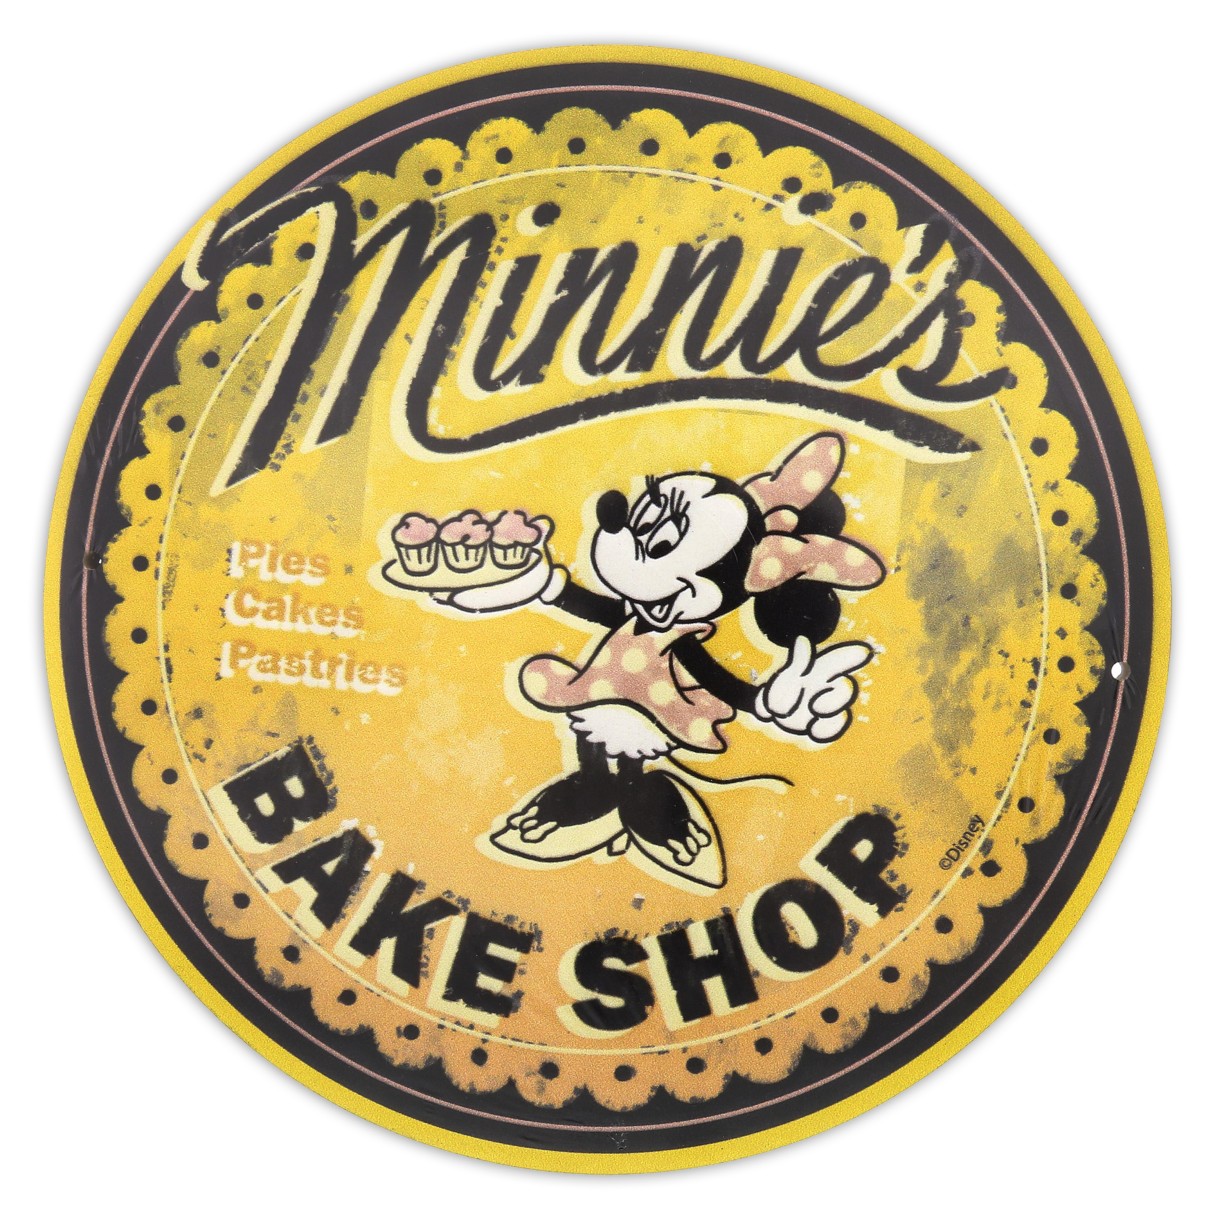 Minnie's Bake Shop Wall Sign